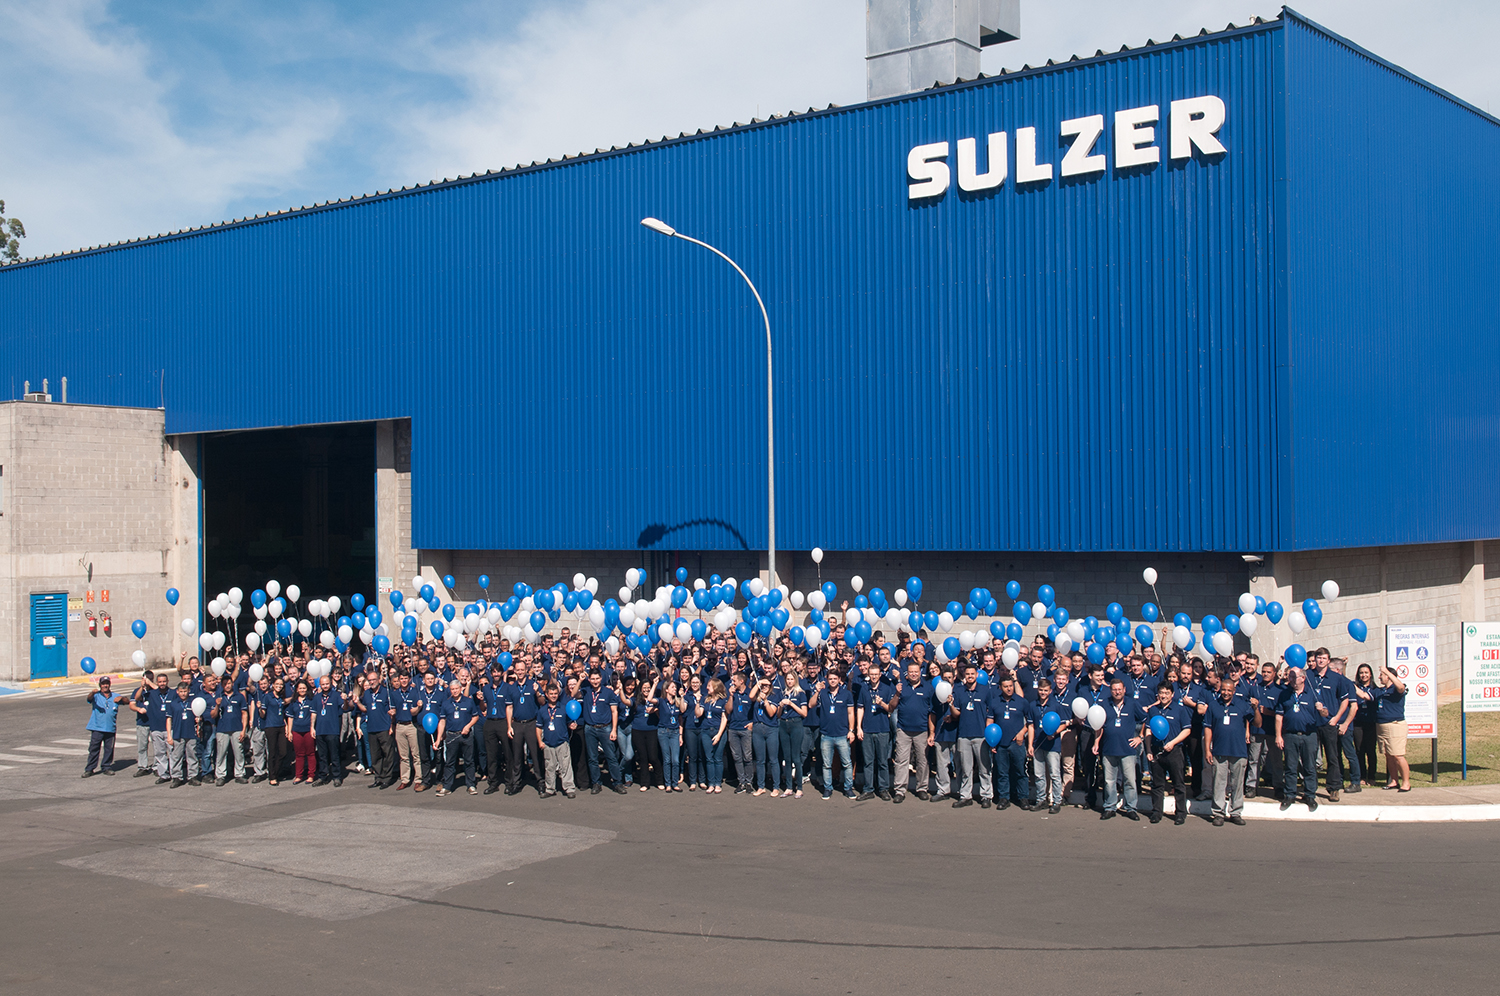 Sulzer employees celebrate 70 years in Brazil. Image copyright Sulzer.